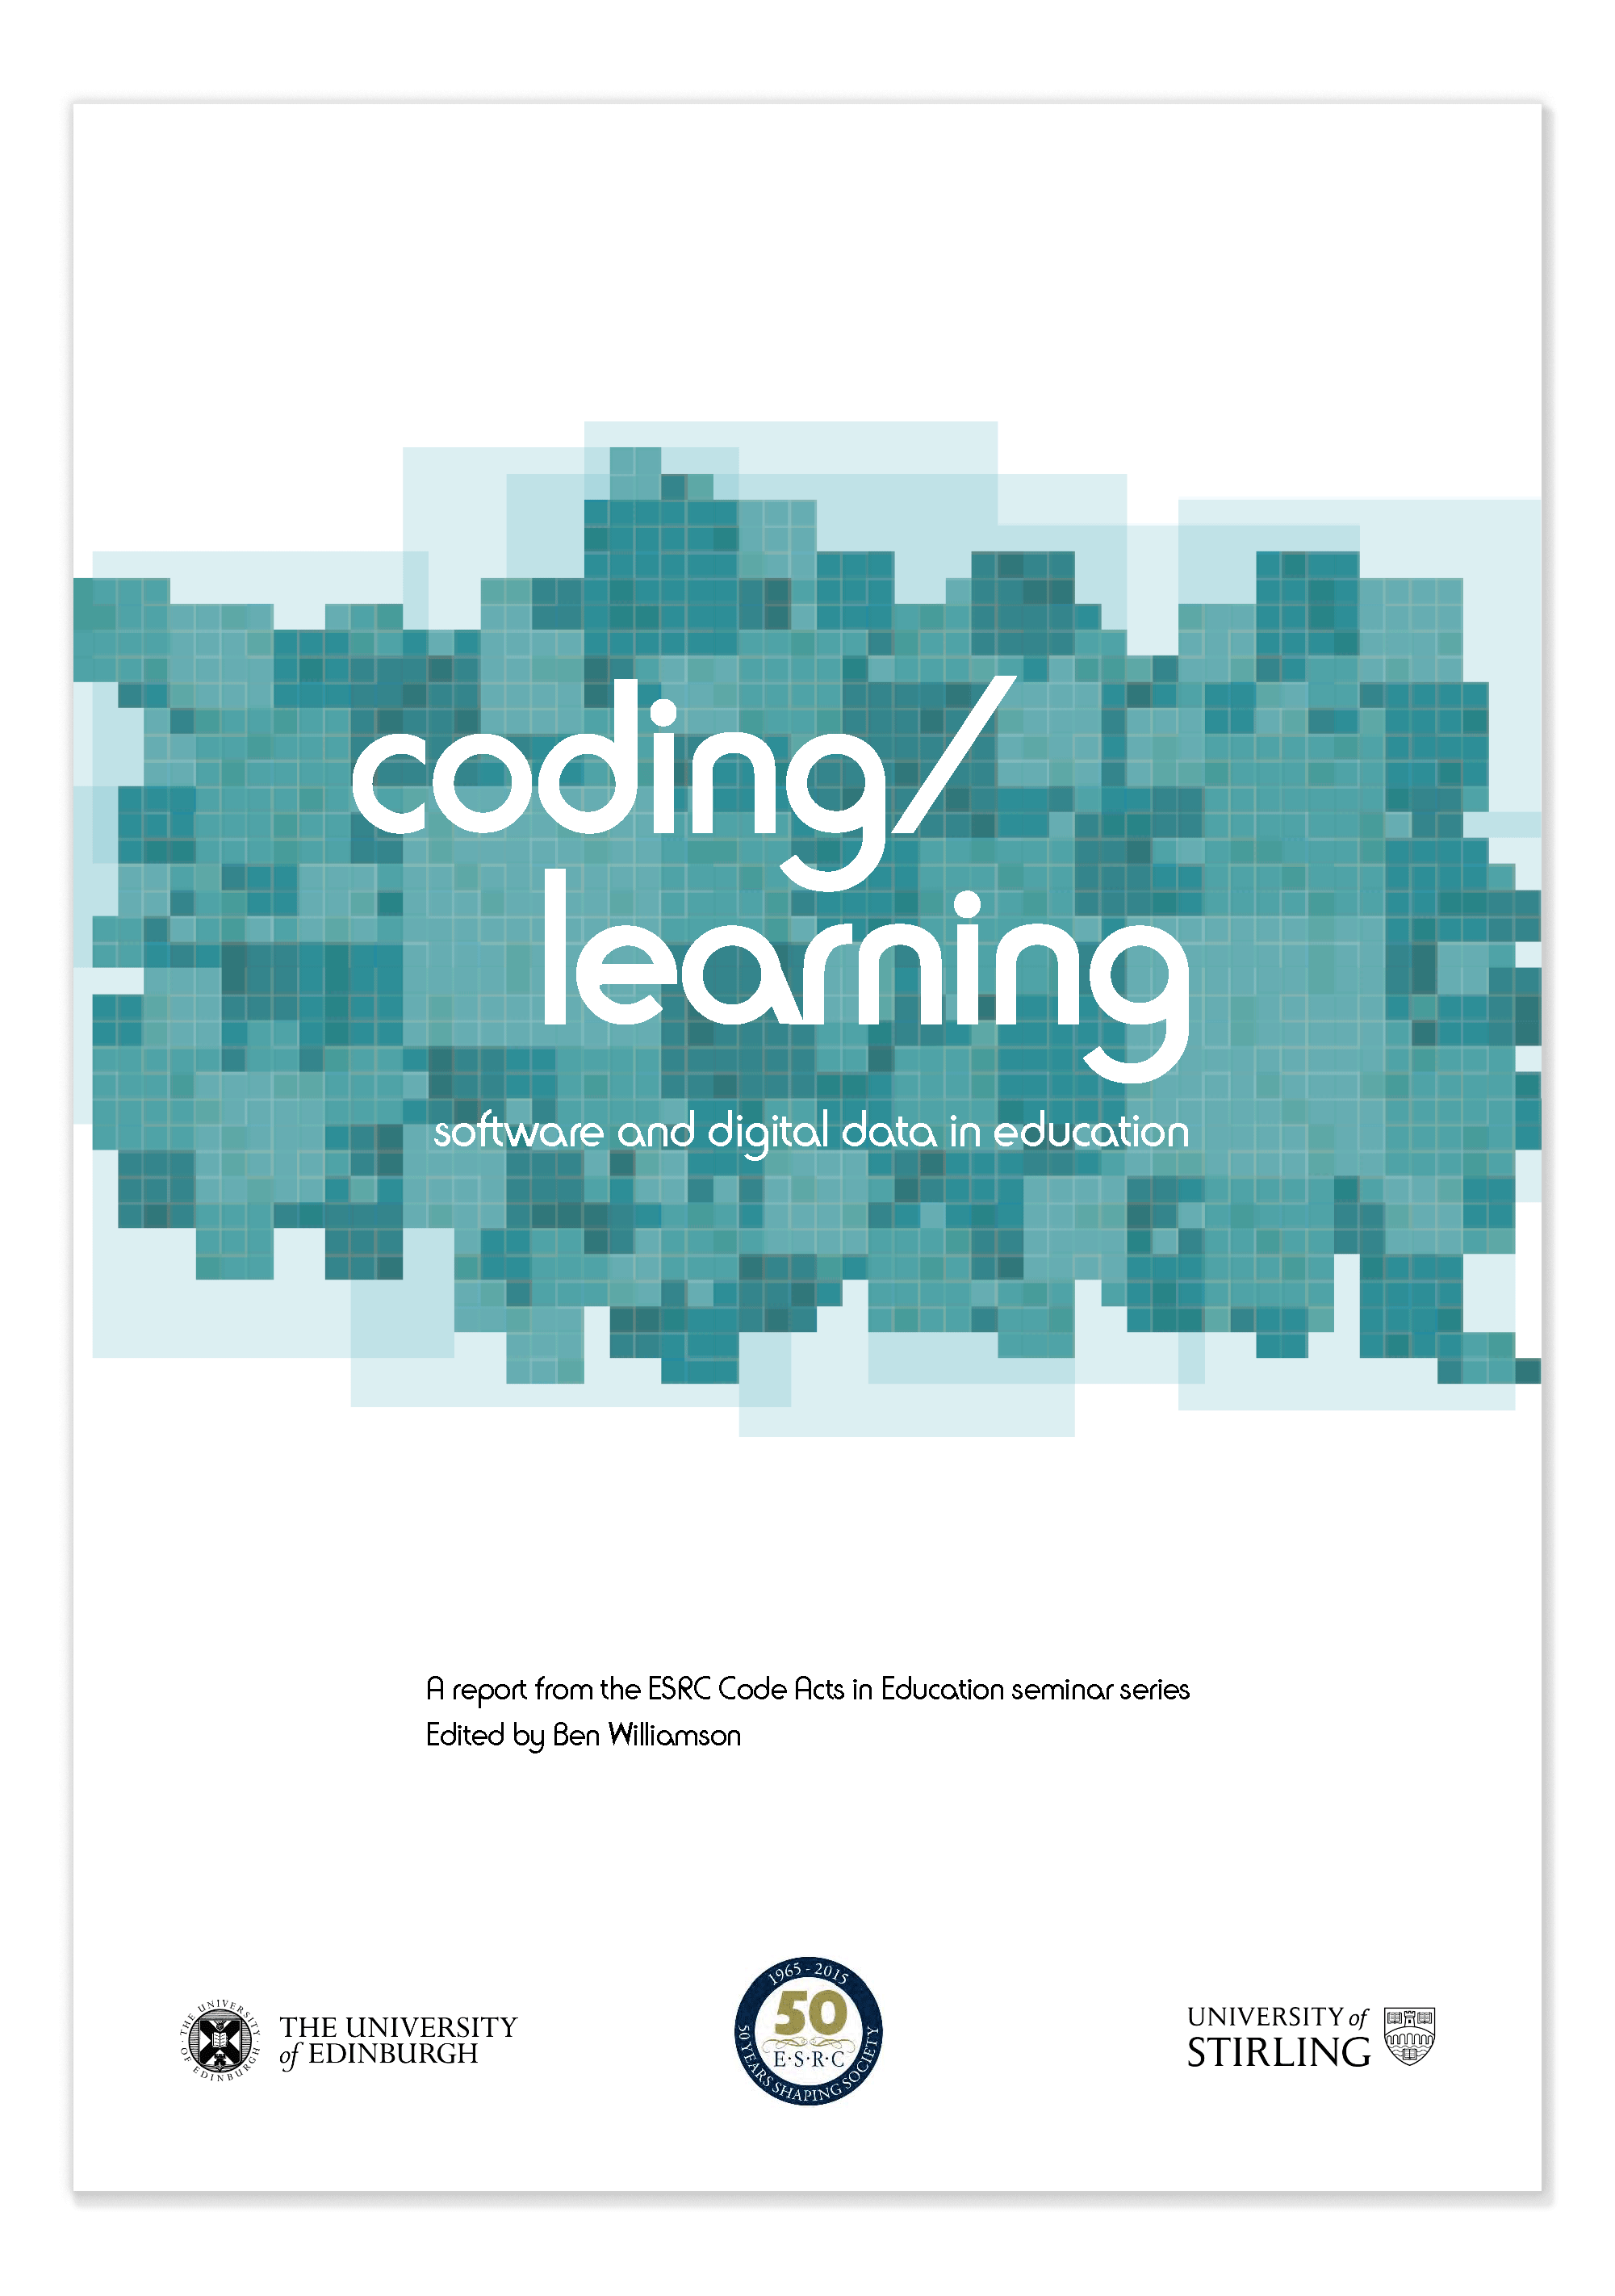 coding/learning thumbnail